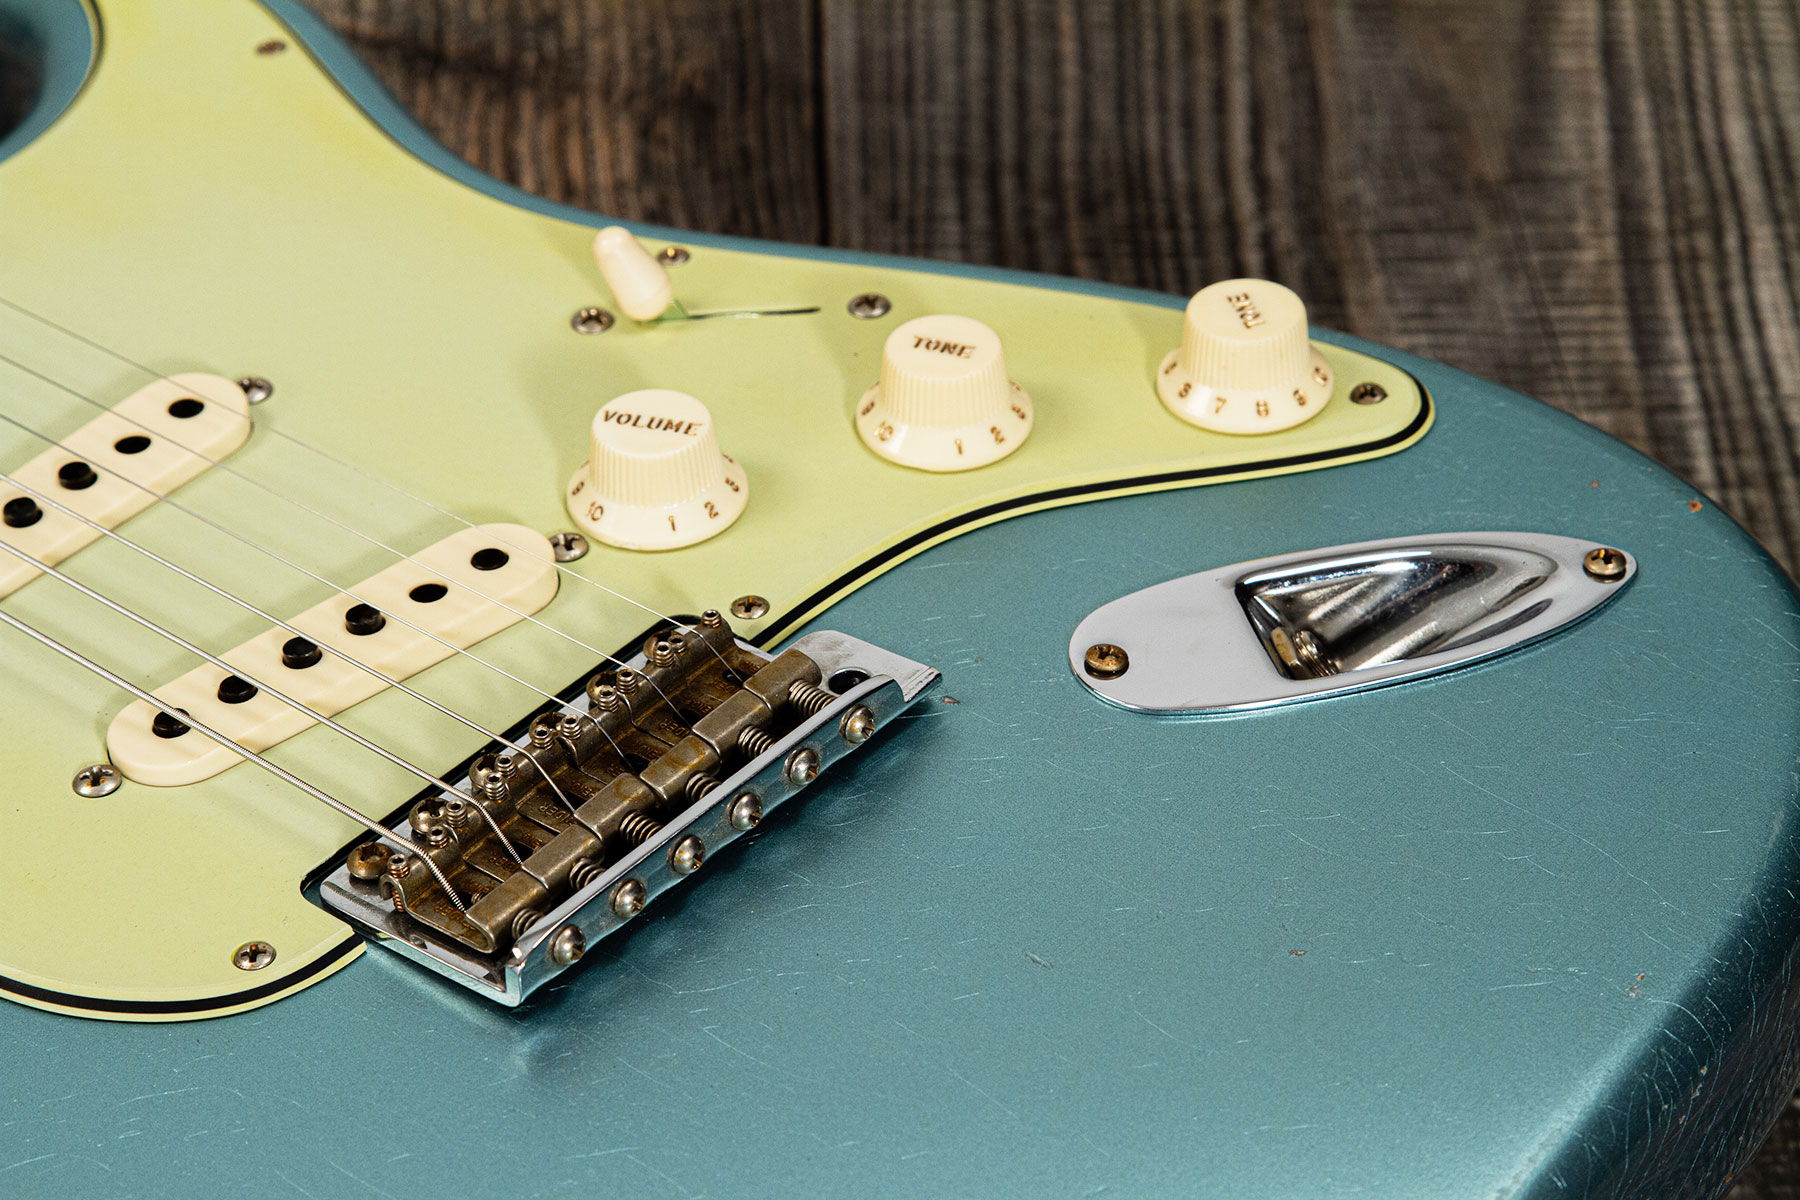 Fender Custom Shop Strat 1959 3s Trem Rw #cz566857 - Journeyman Relic Teal Green Metallic - E-Gitarre in Str-Form - Variation 5